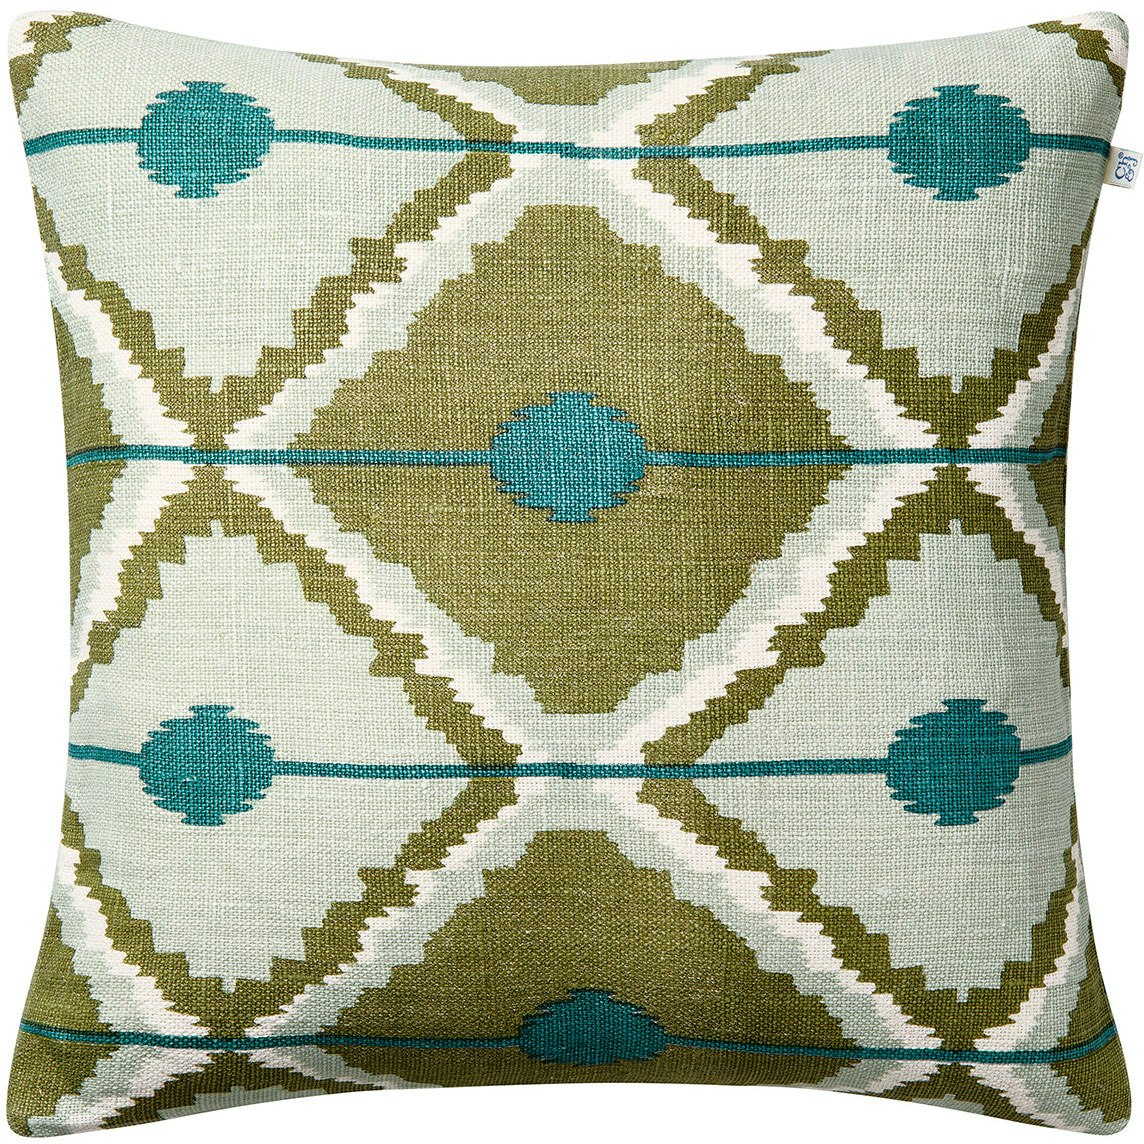 Pune Cushion Cover 50x50 cm, Cactus Green / Sky Blue / Aqua